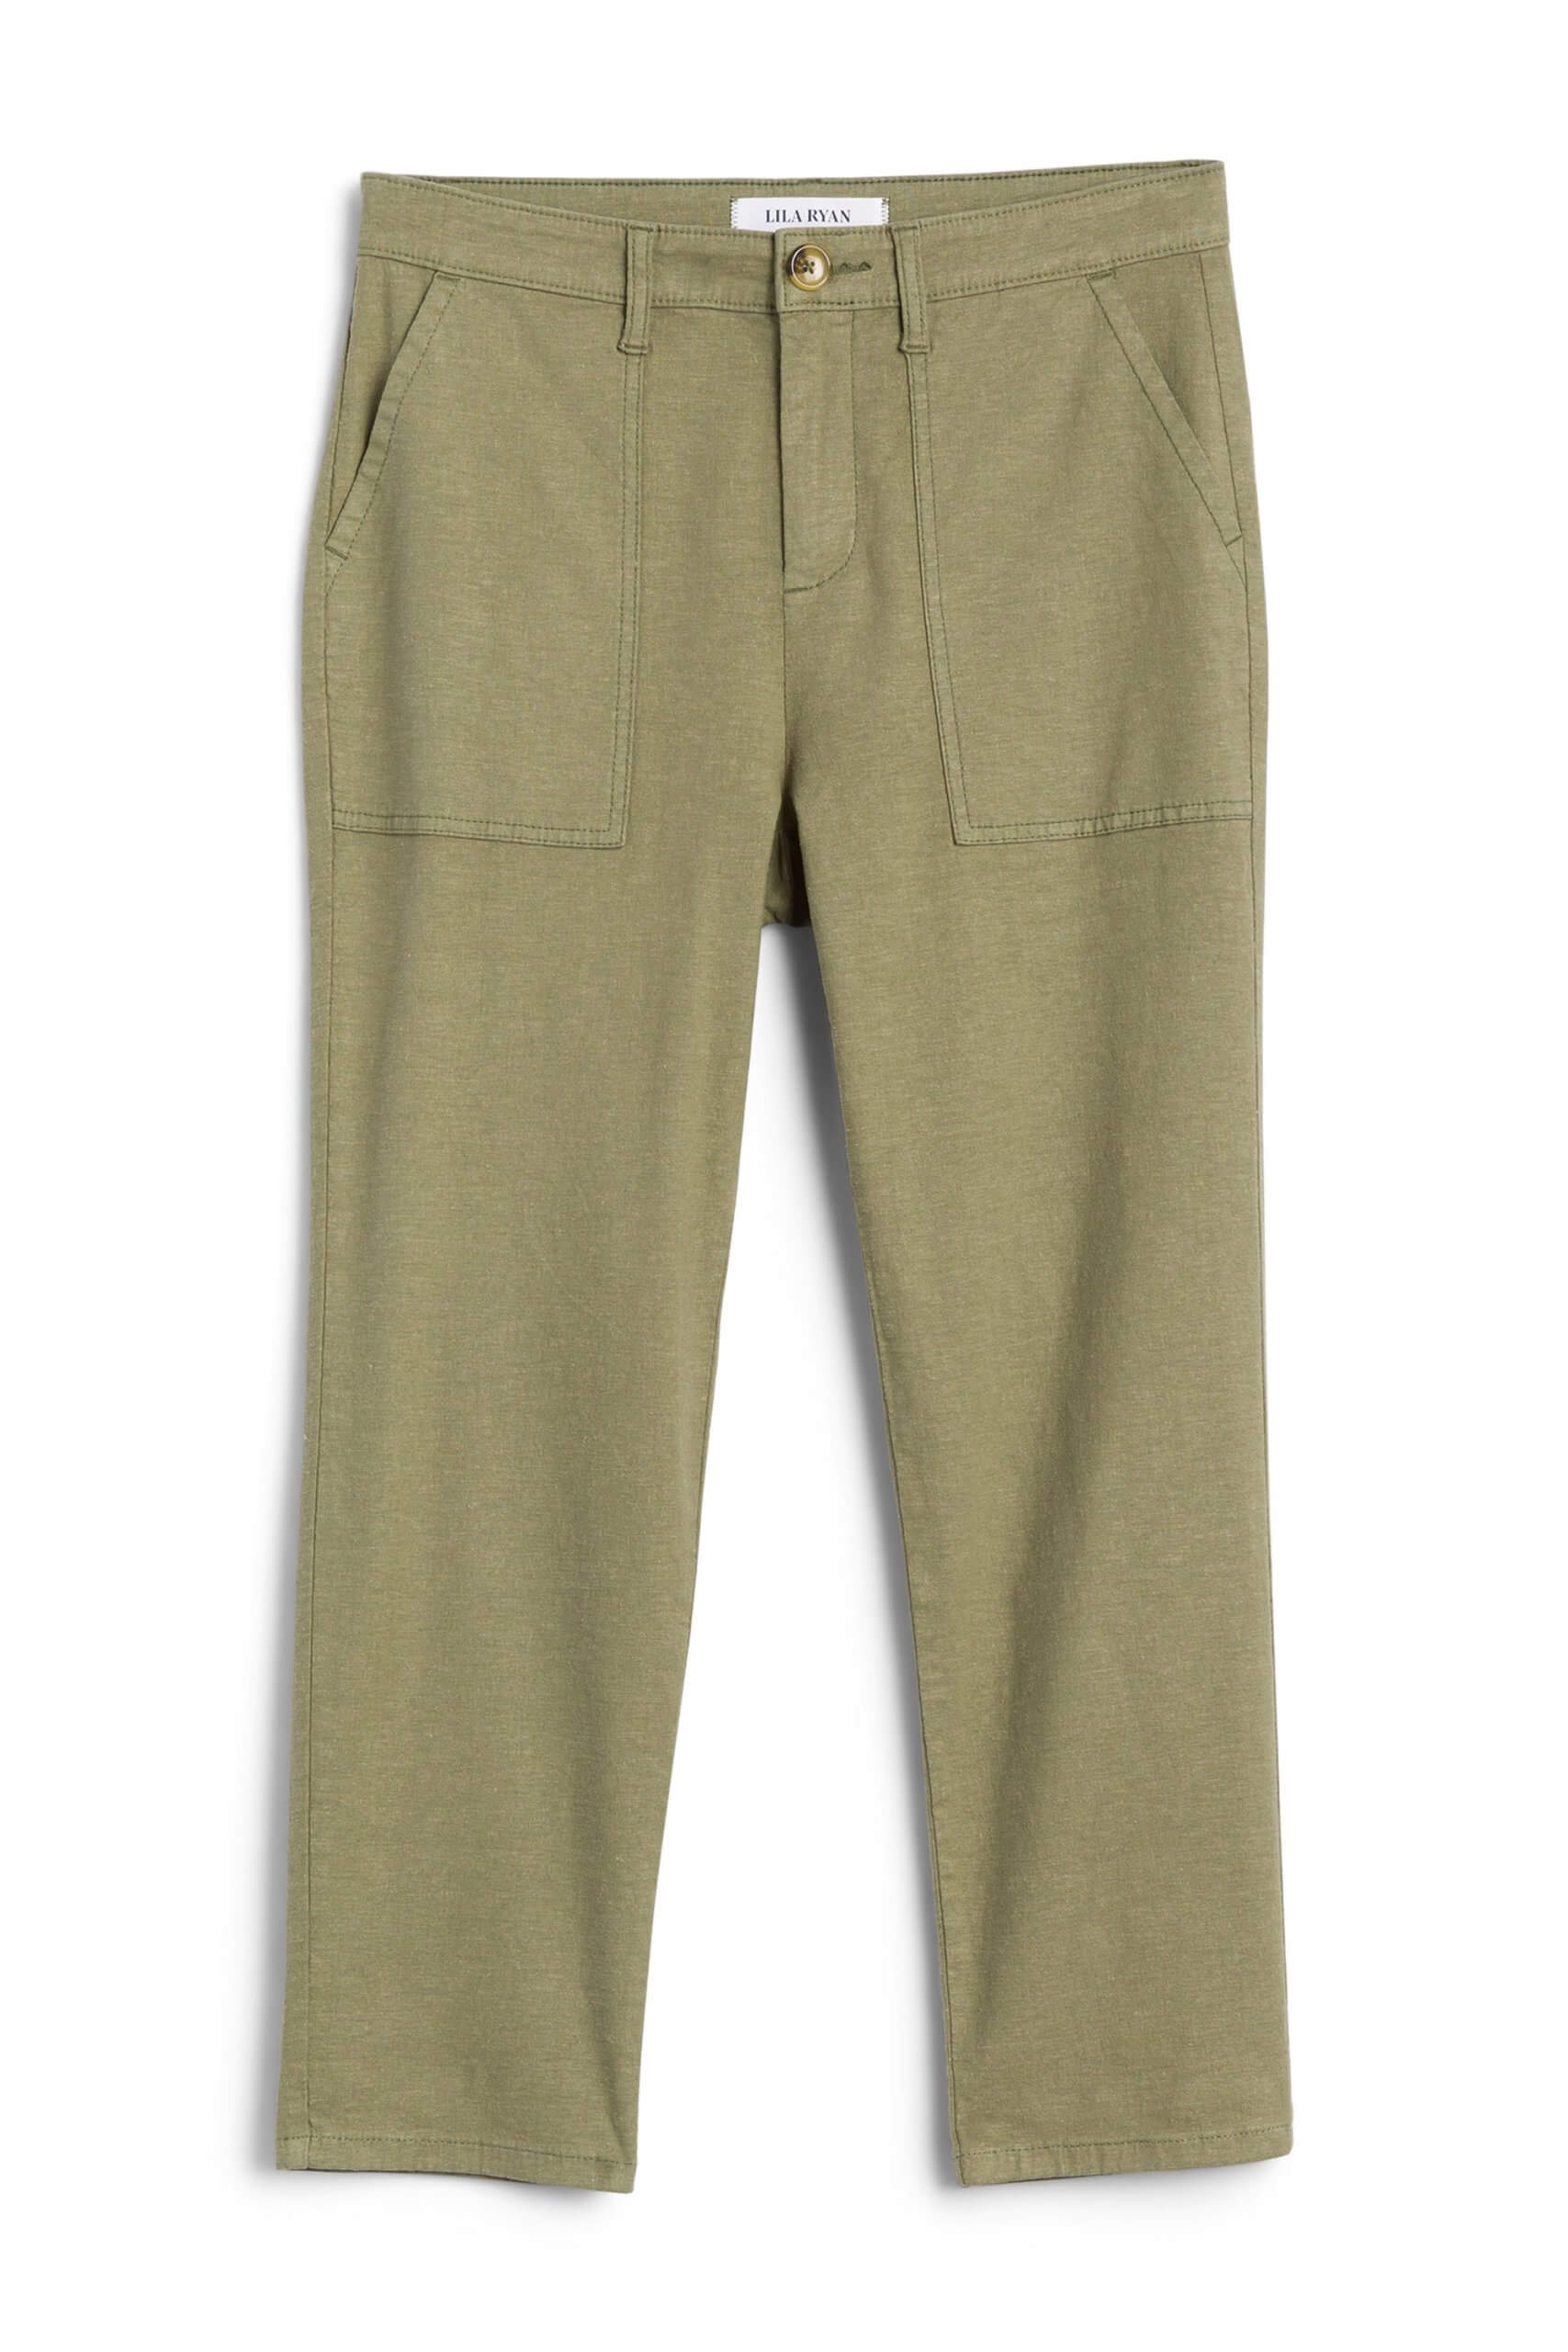 Olive Green Linen Pants + Oversized Jean Jacket.